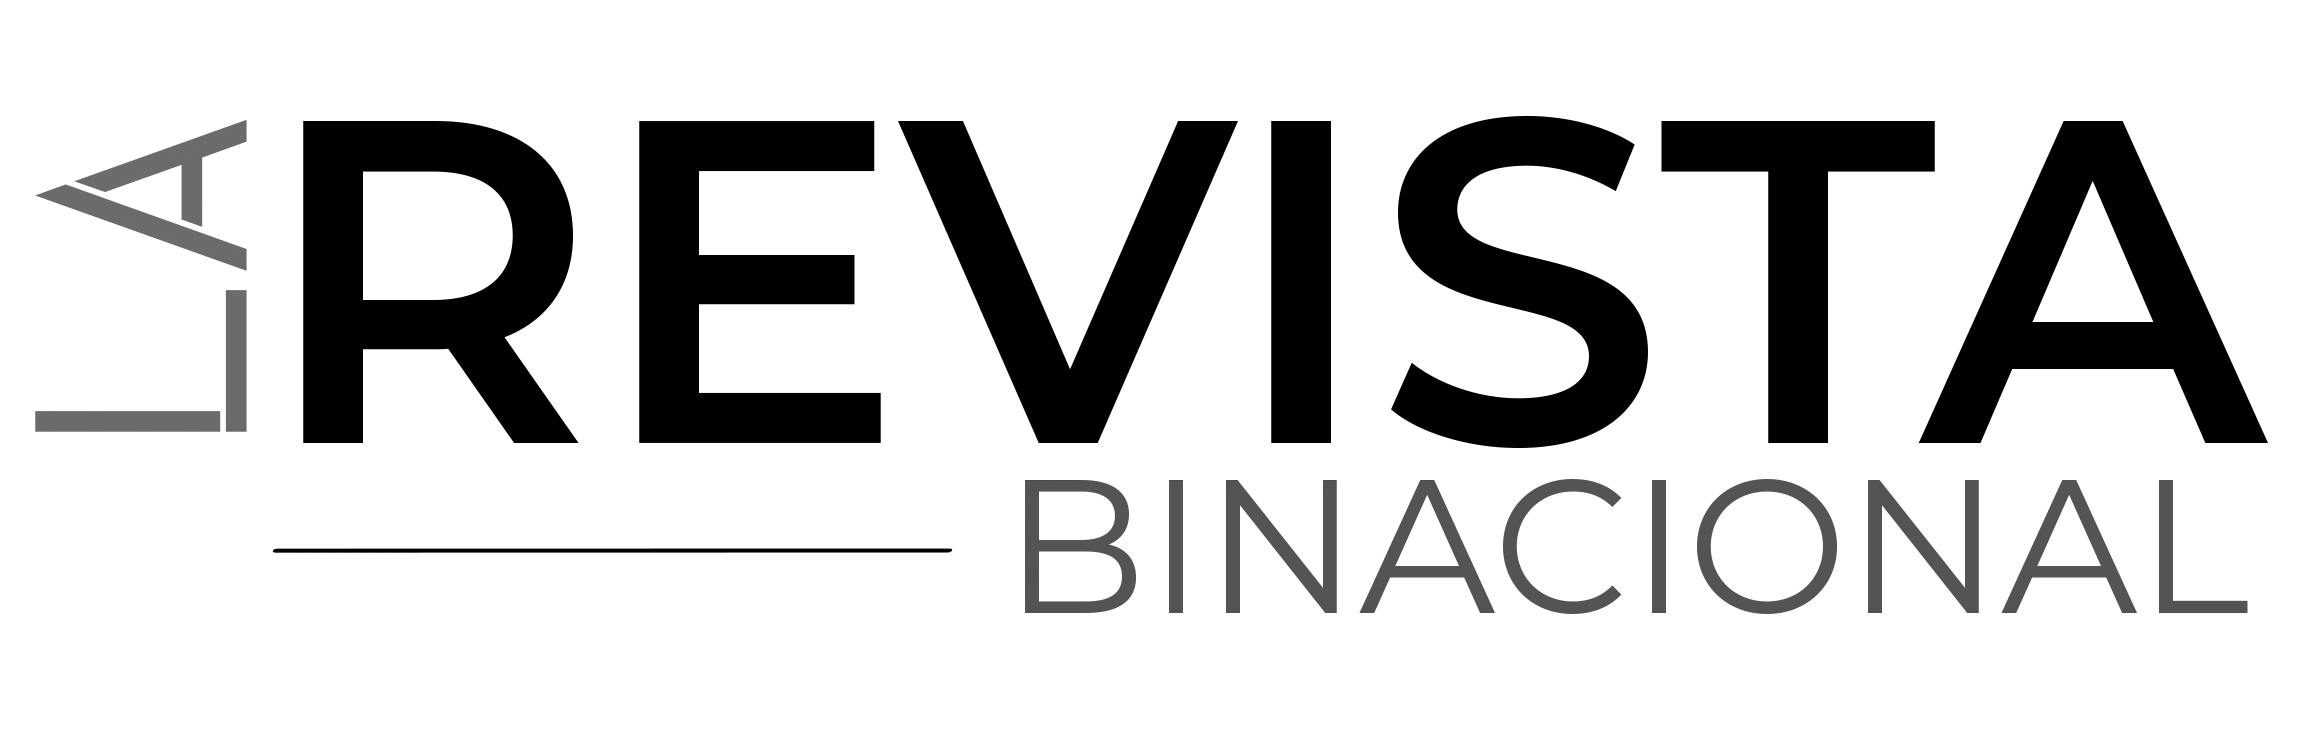 La Revista Binacional Logo